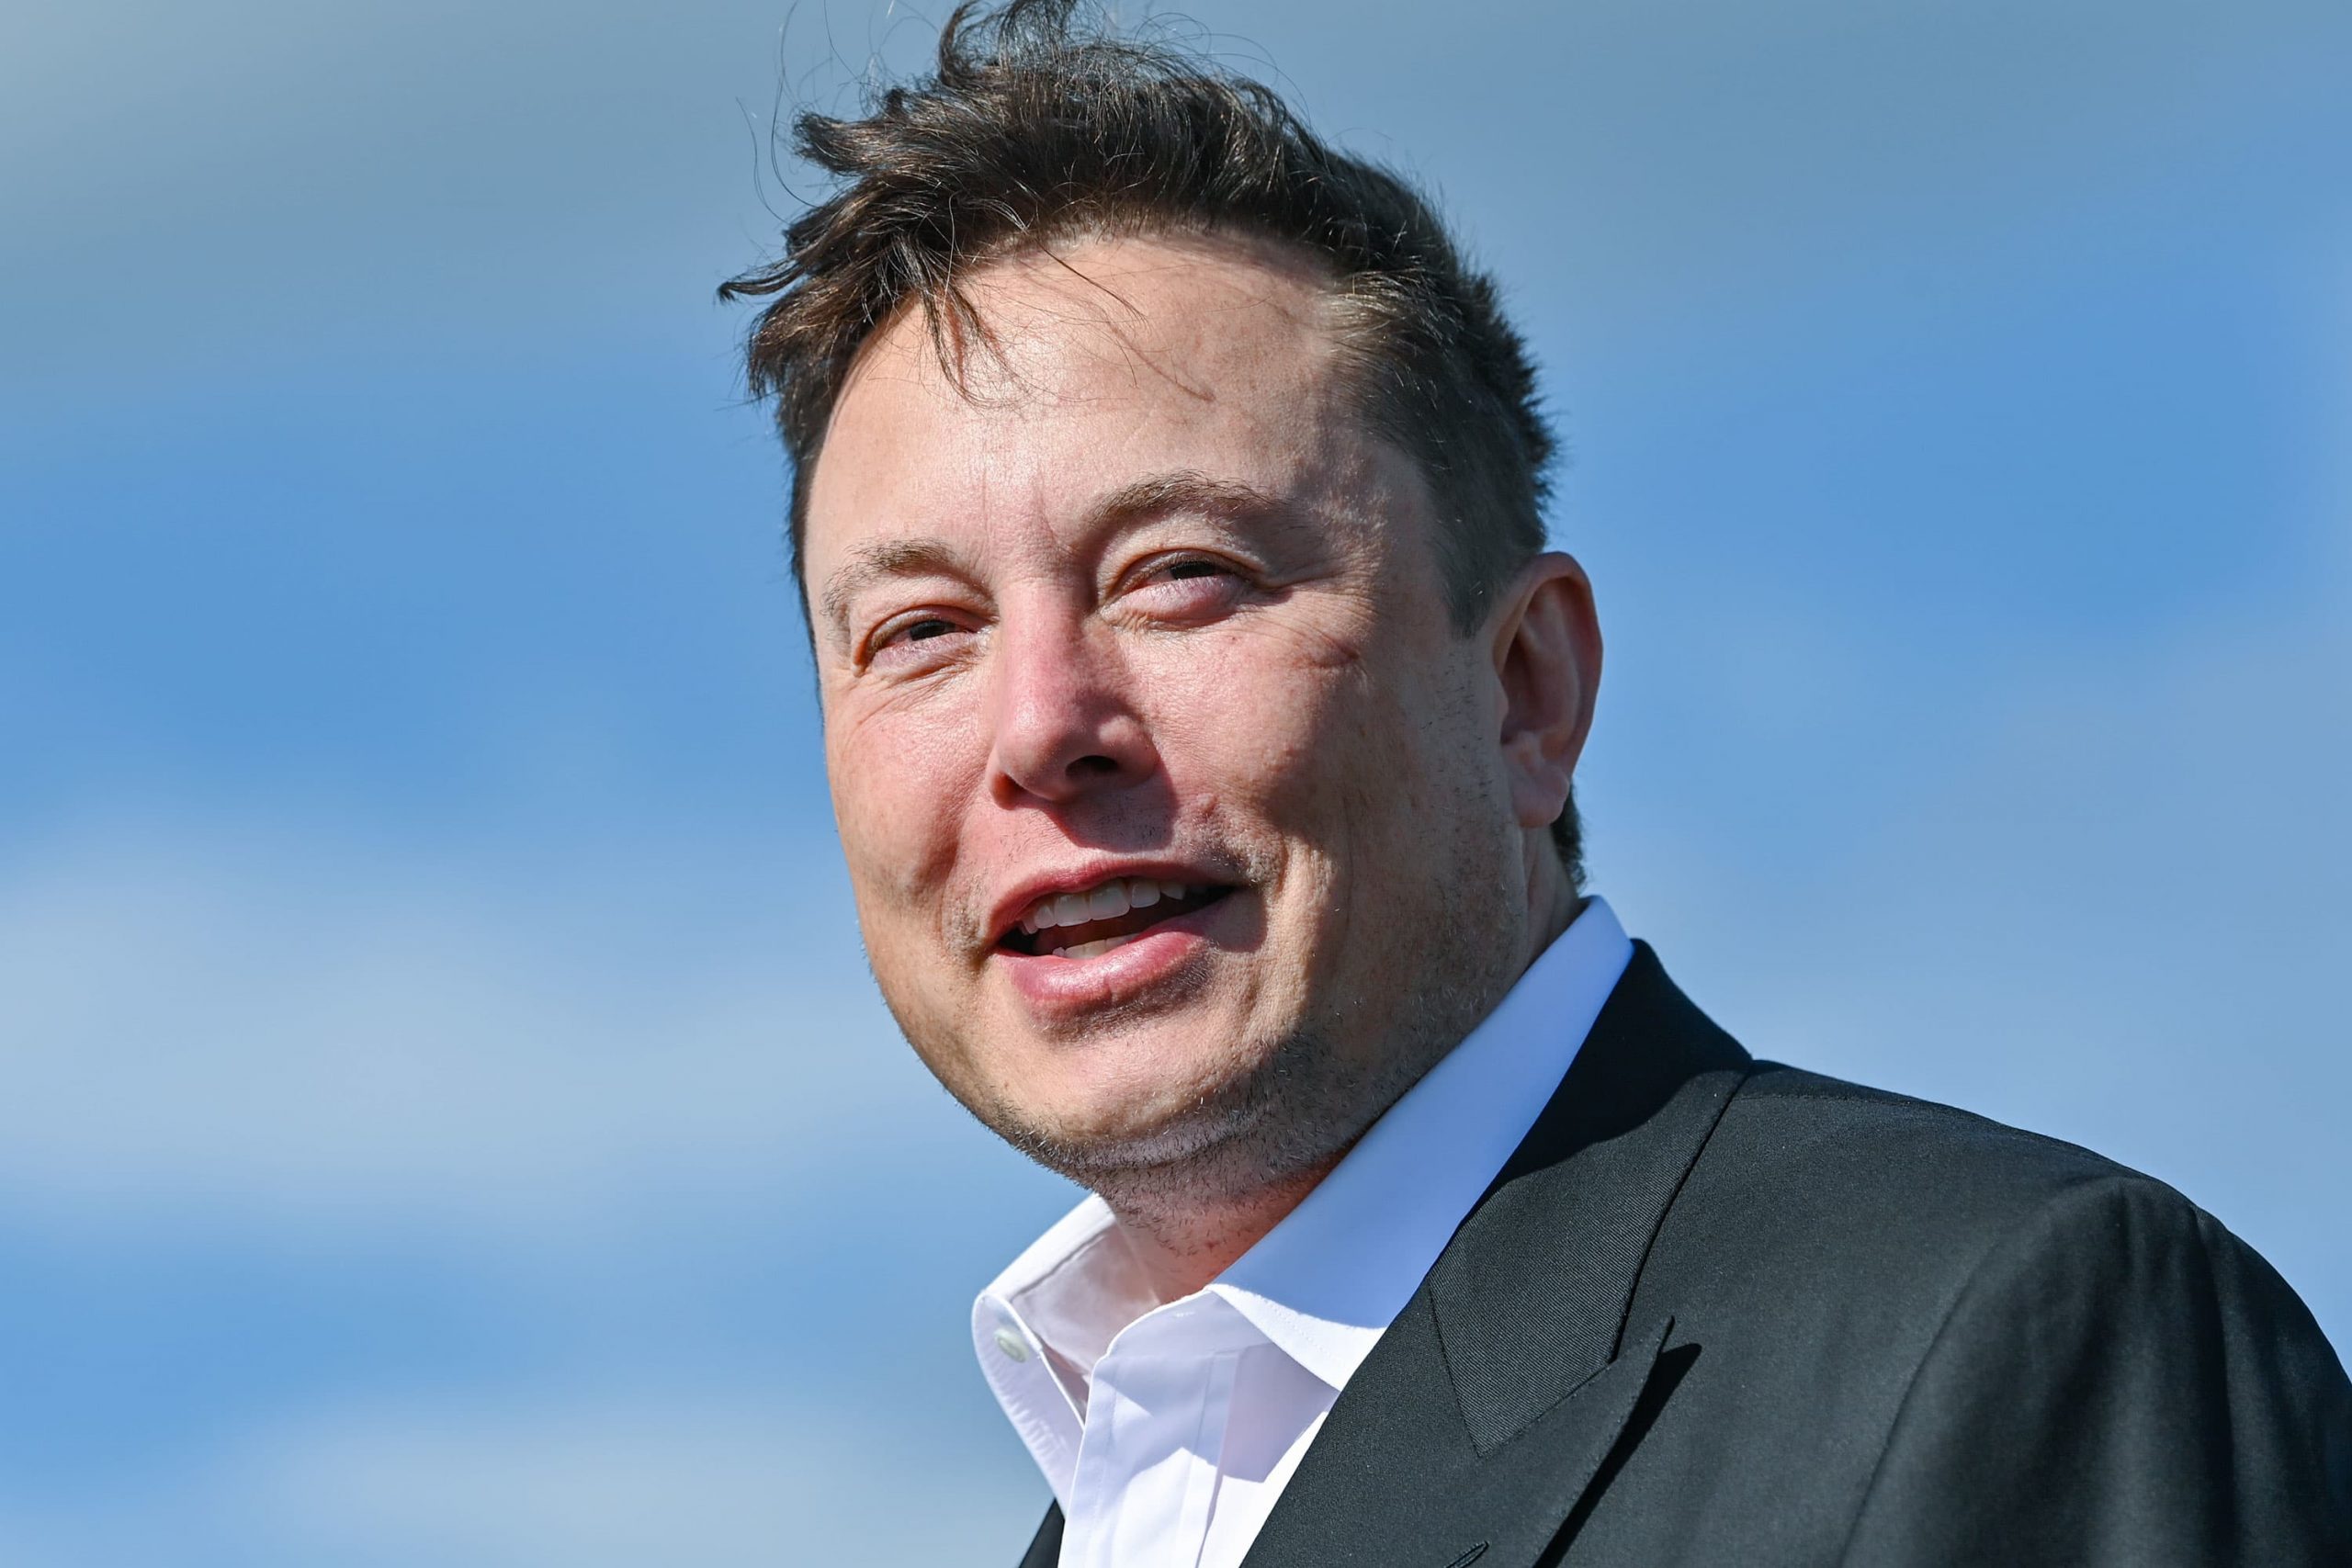 Elon musk's tips to ceos